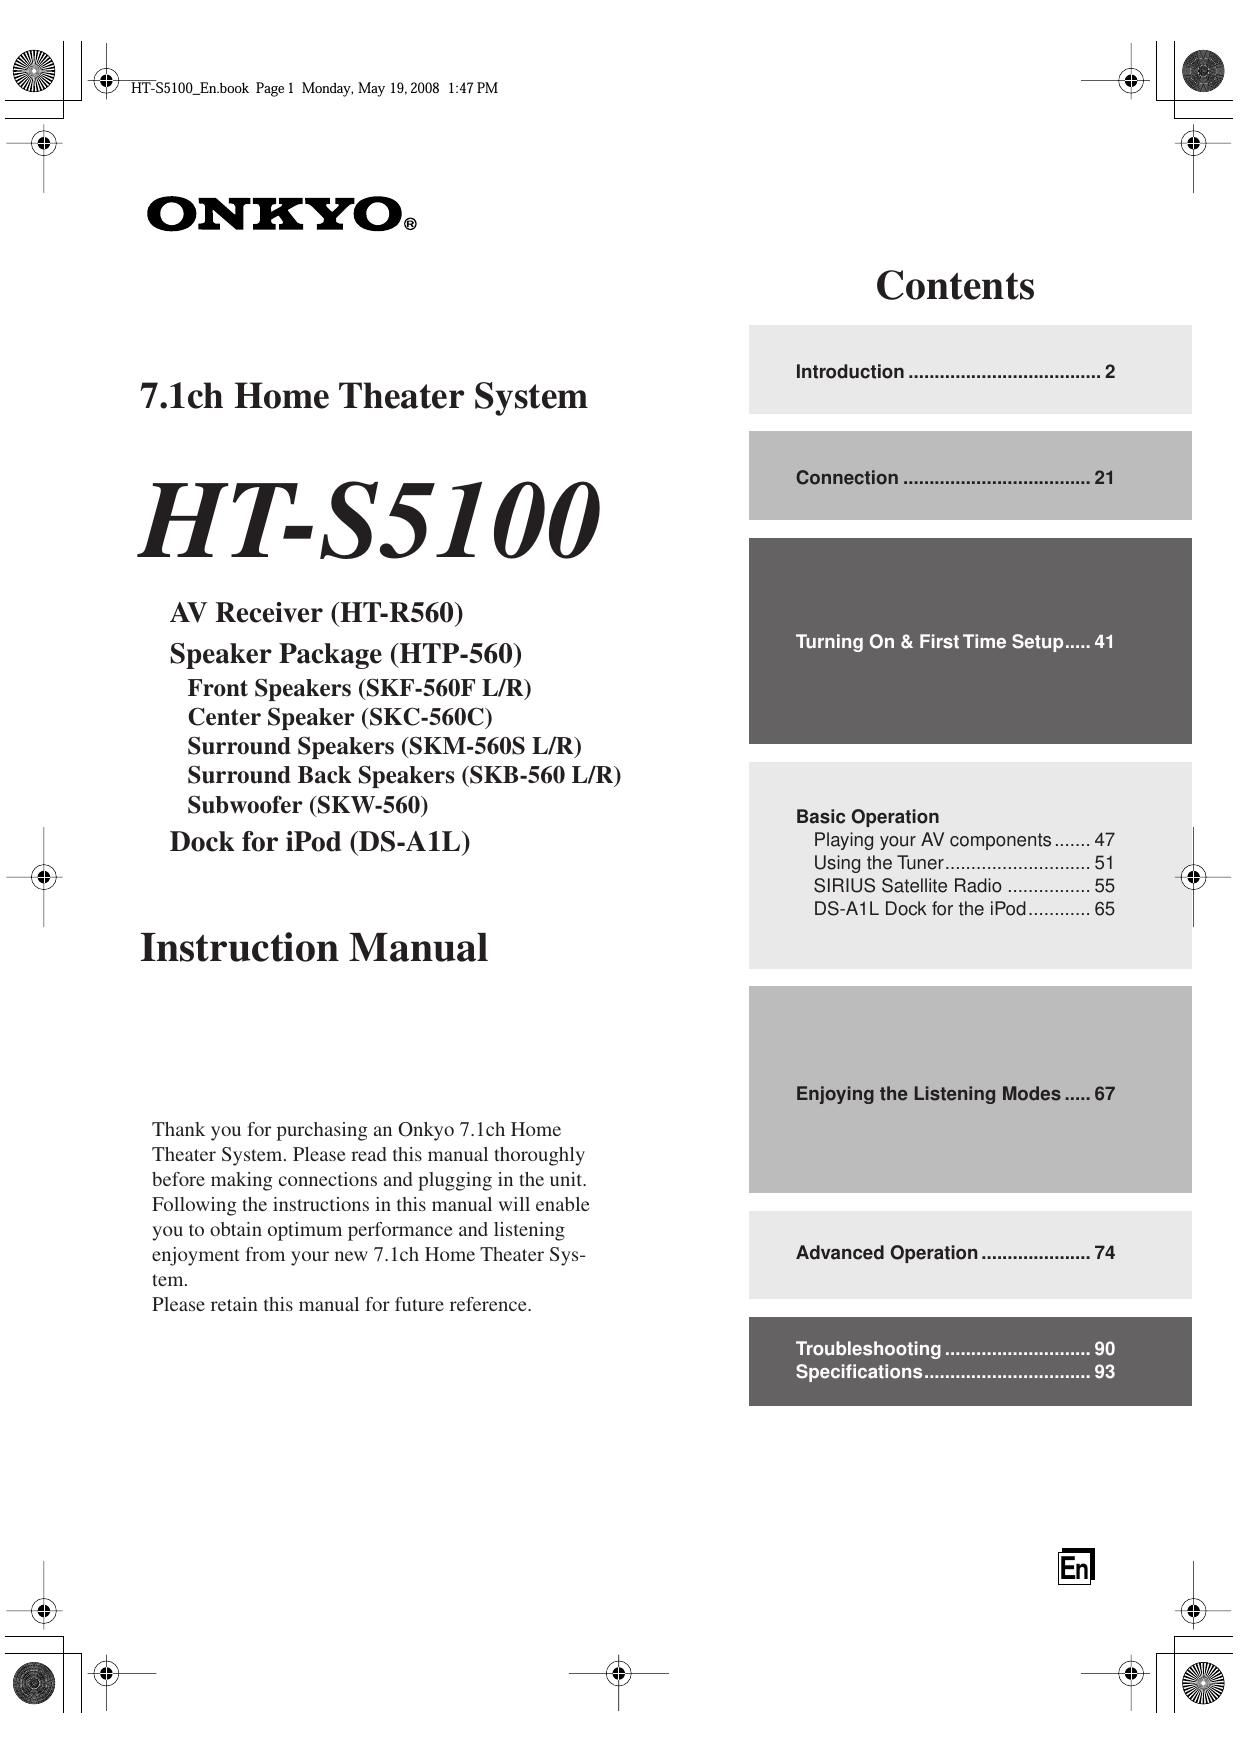 Onkyo HTS 5100 Service Manual